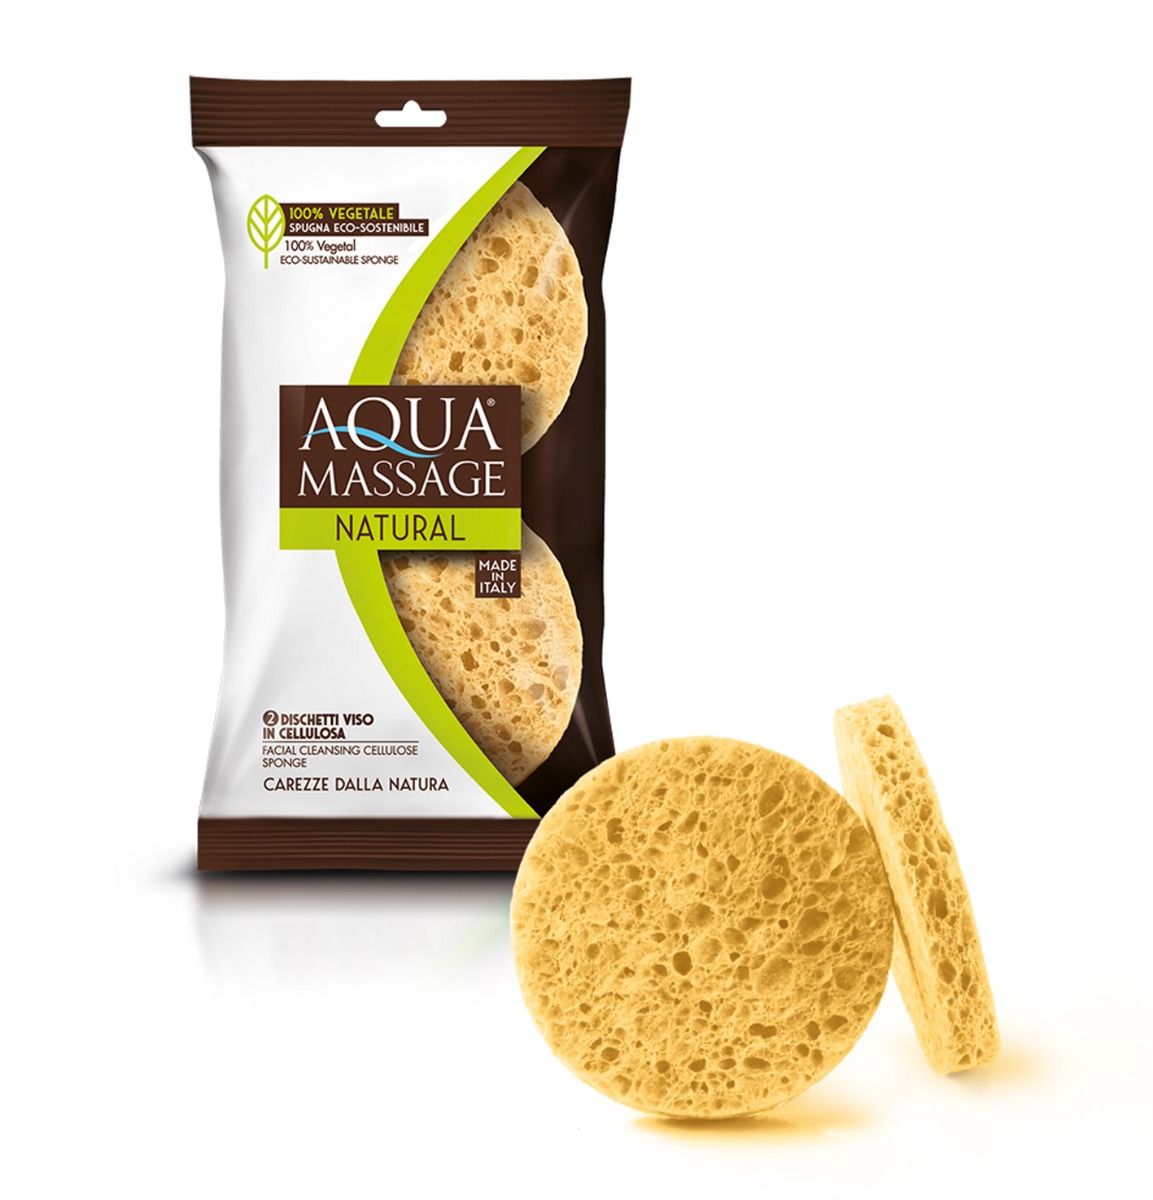 Aqua Massage - Natural Facial Cleansing Cellulose Sponge (2pcs)